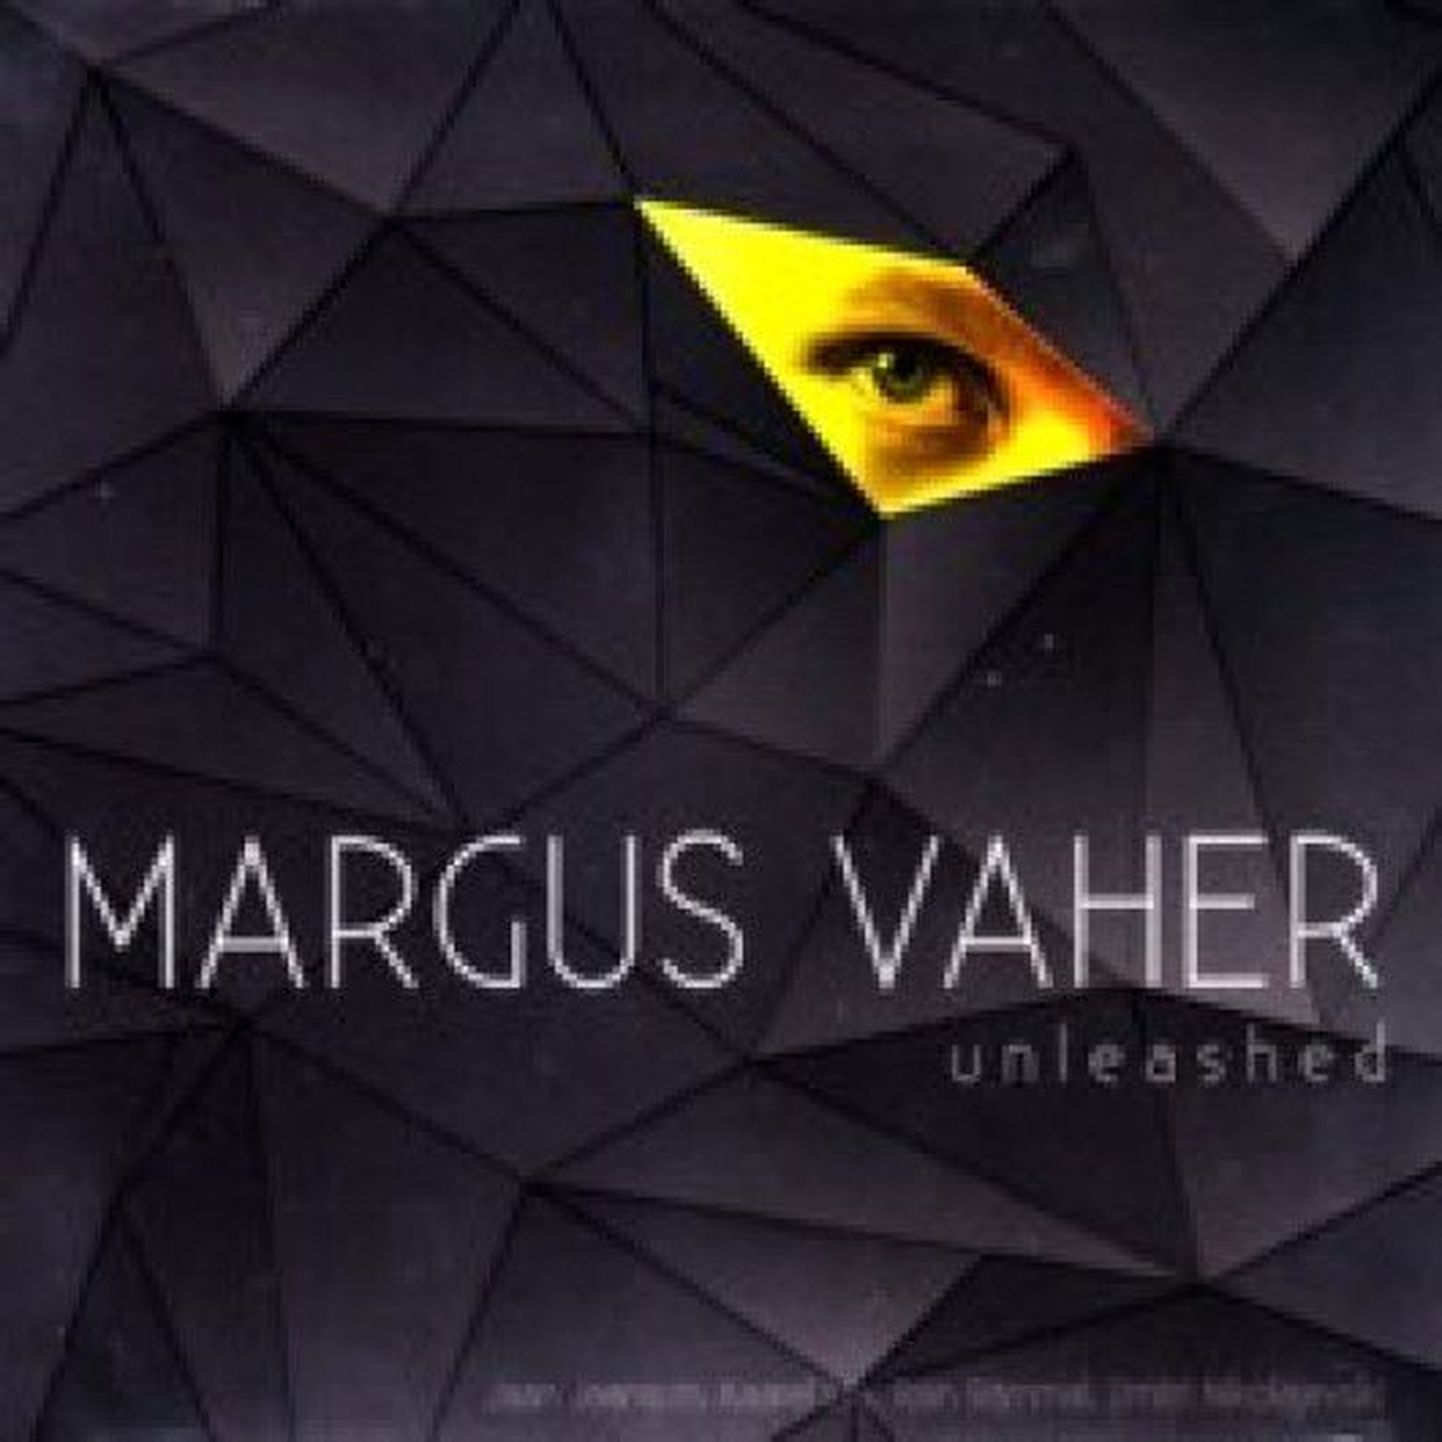 Margus Vaher- Margus Vaher Unleashed